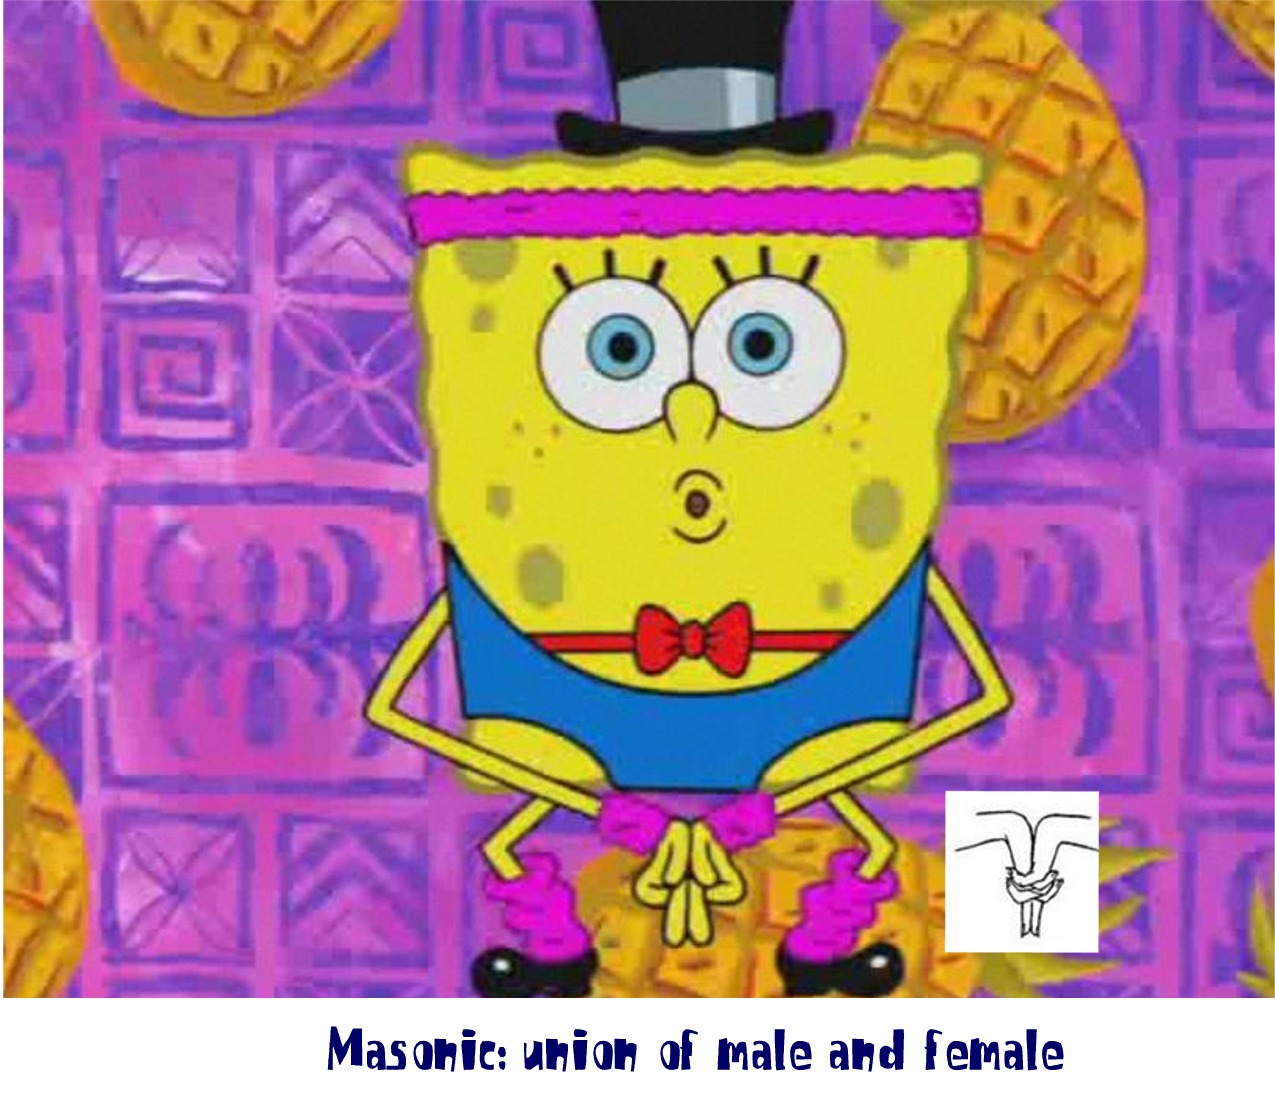 spongebob squarepants - Masonic union of male and female